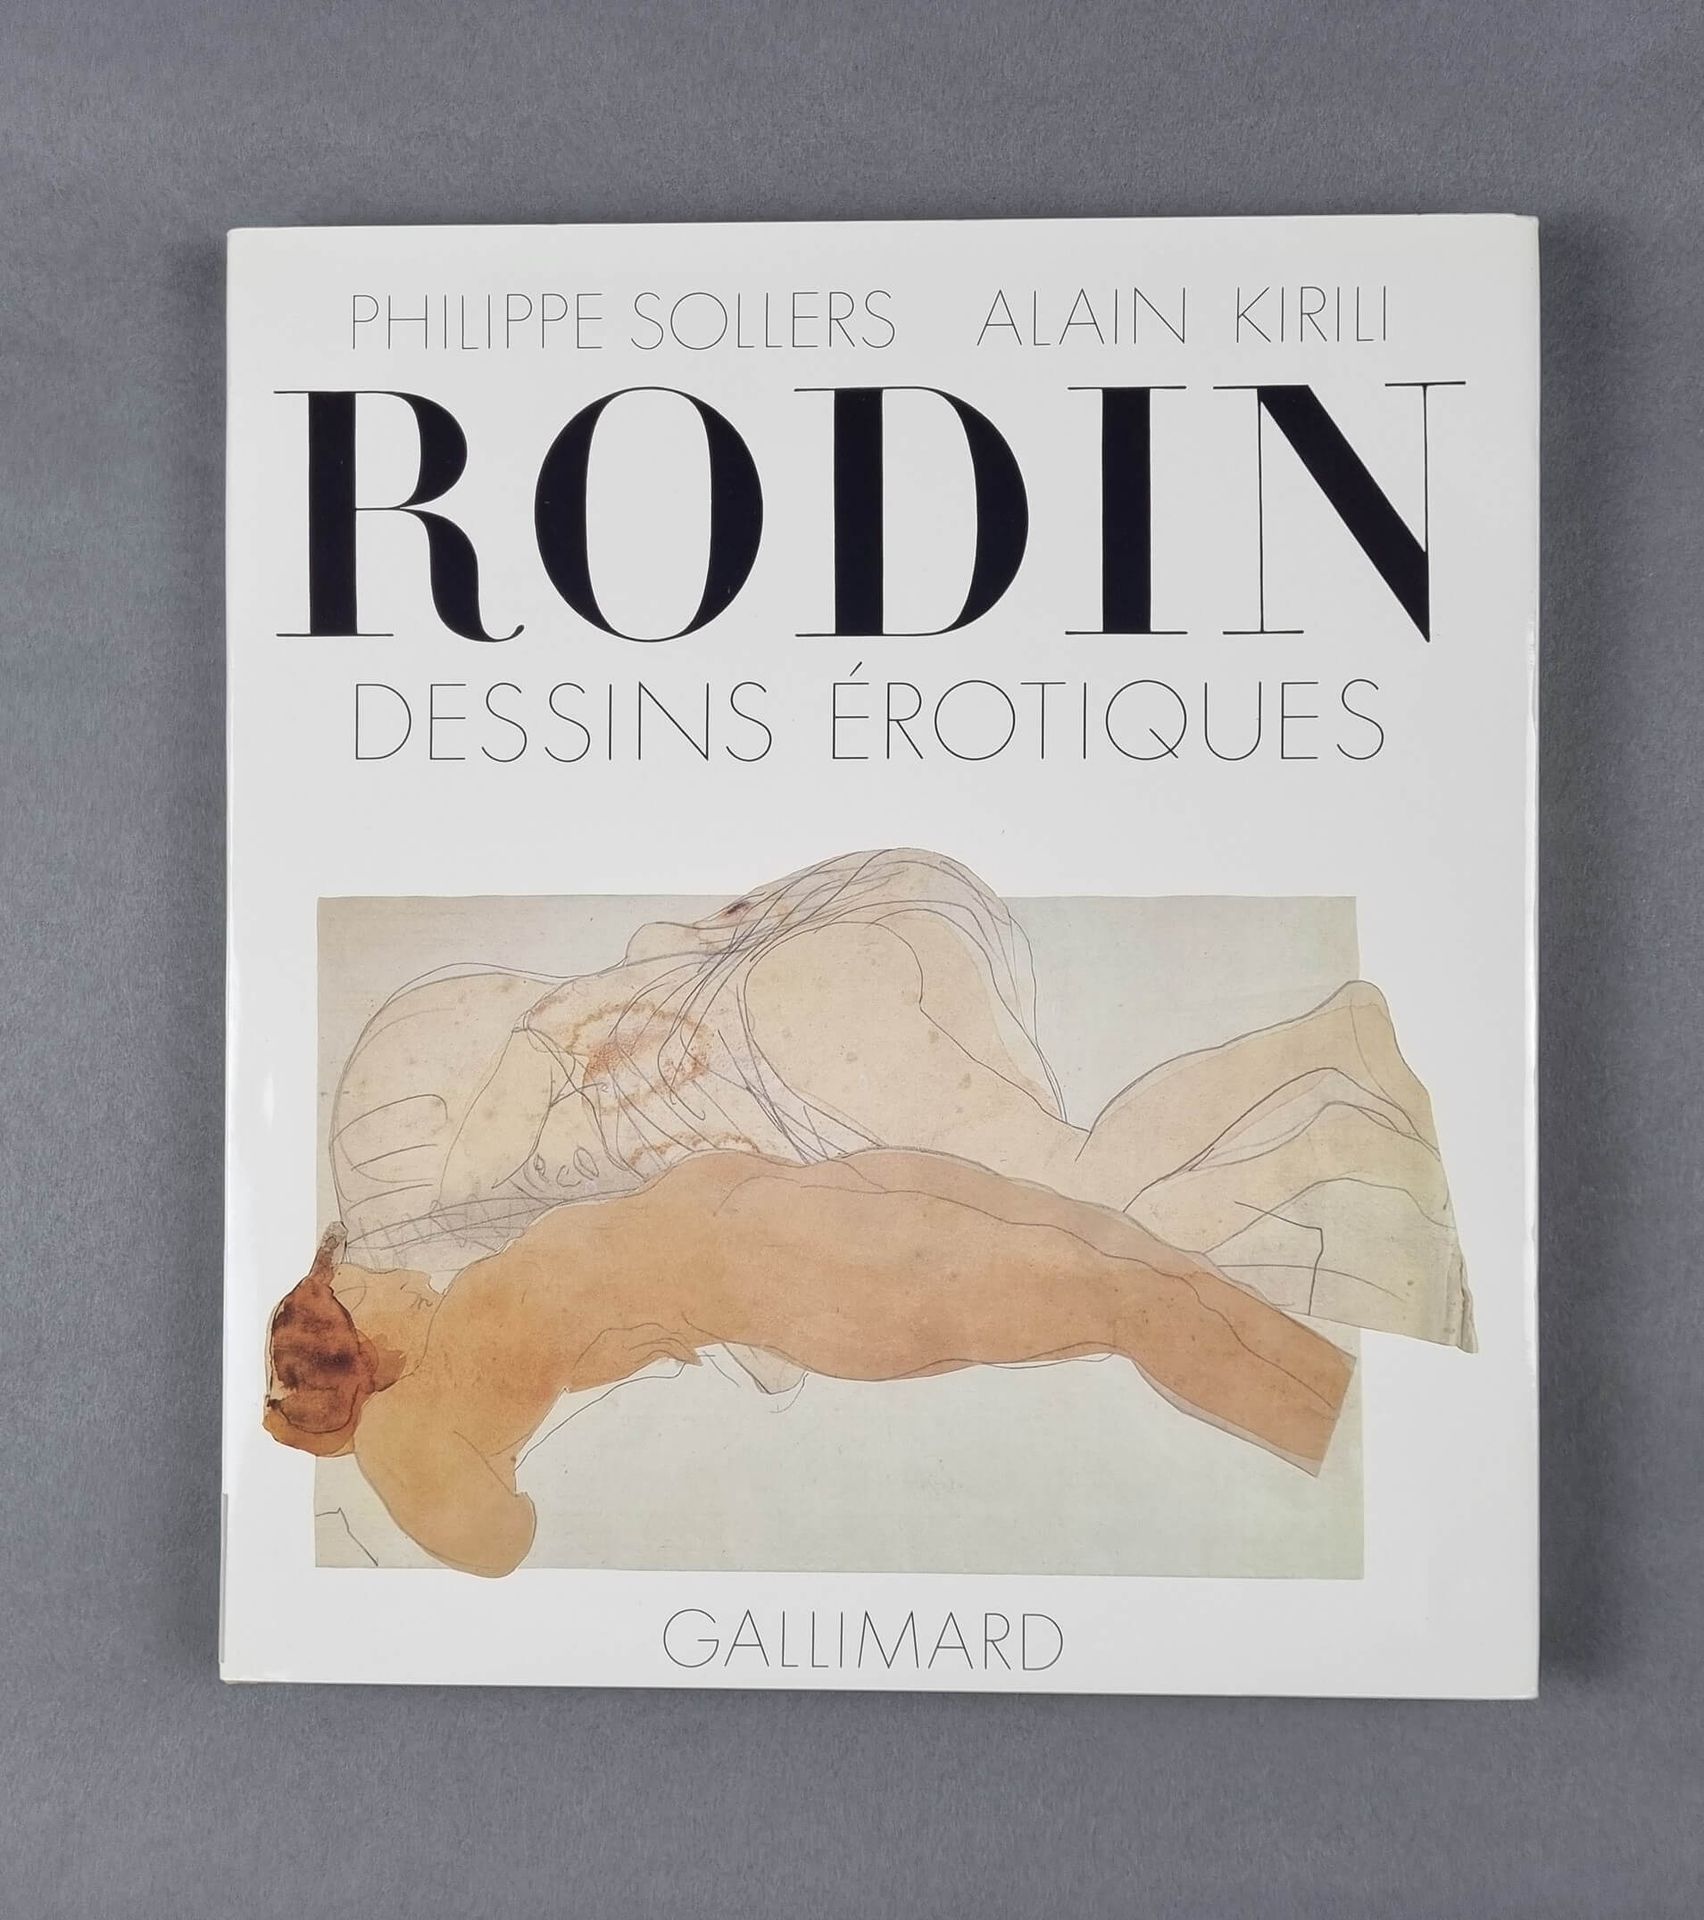 Null 索尔斯(Philippe)等人：罗丹-装饰画。Gallimard出版社，1987年。